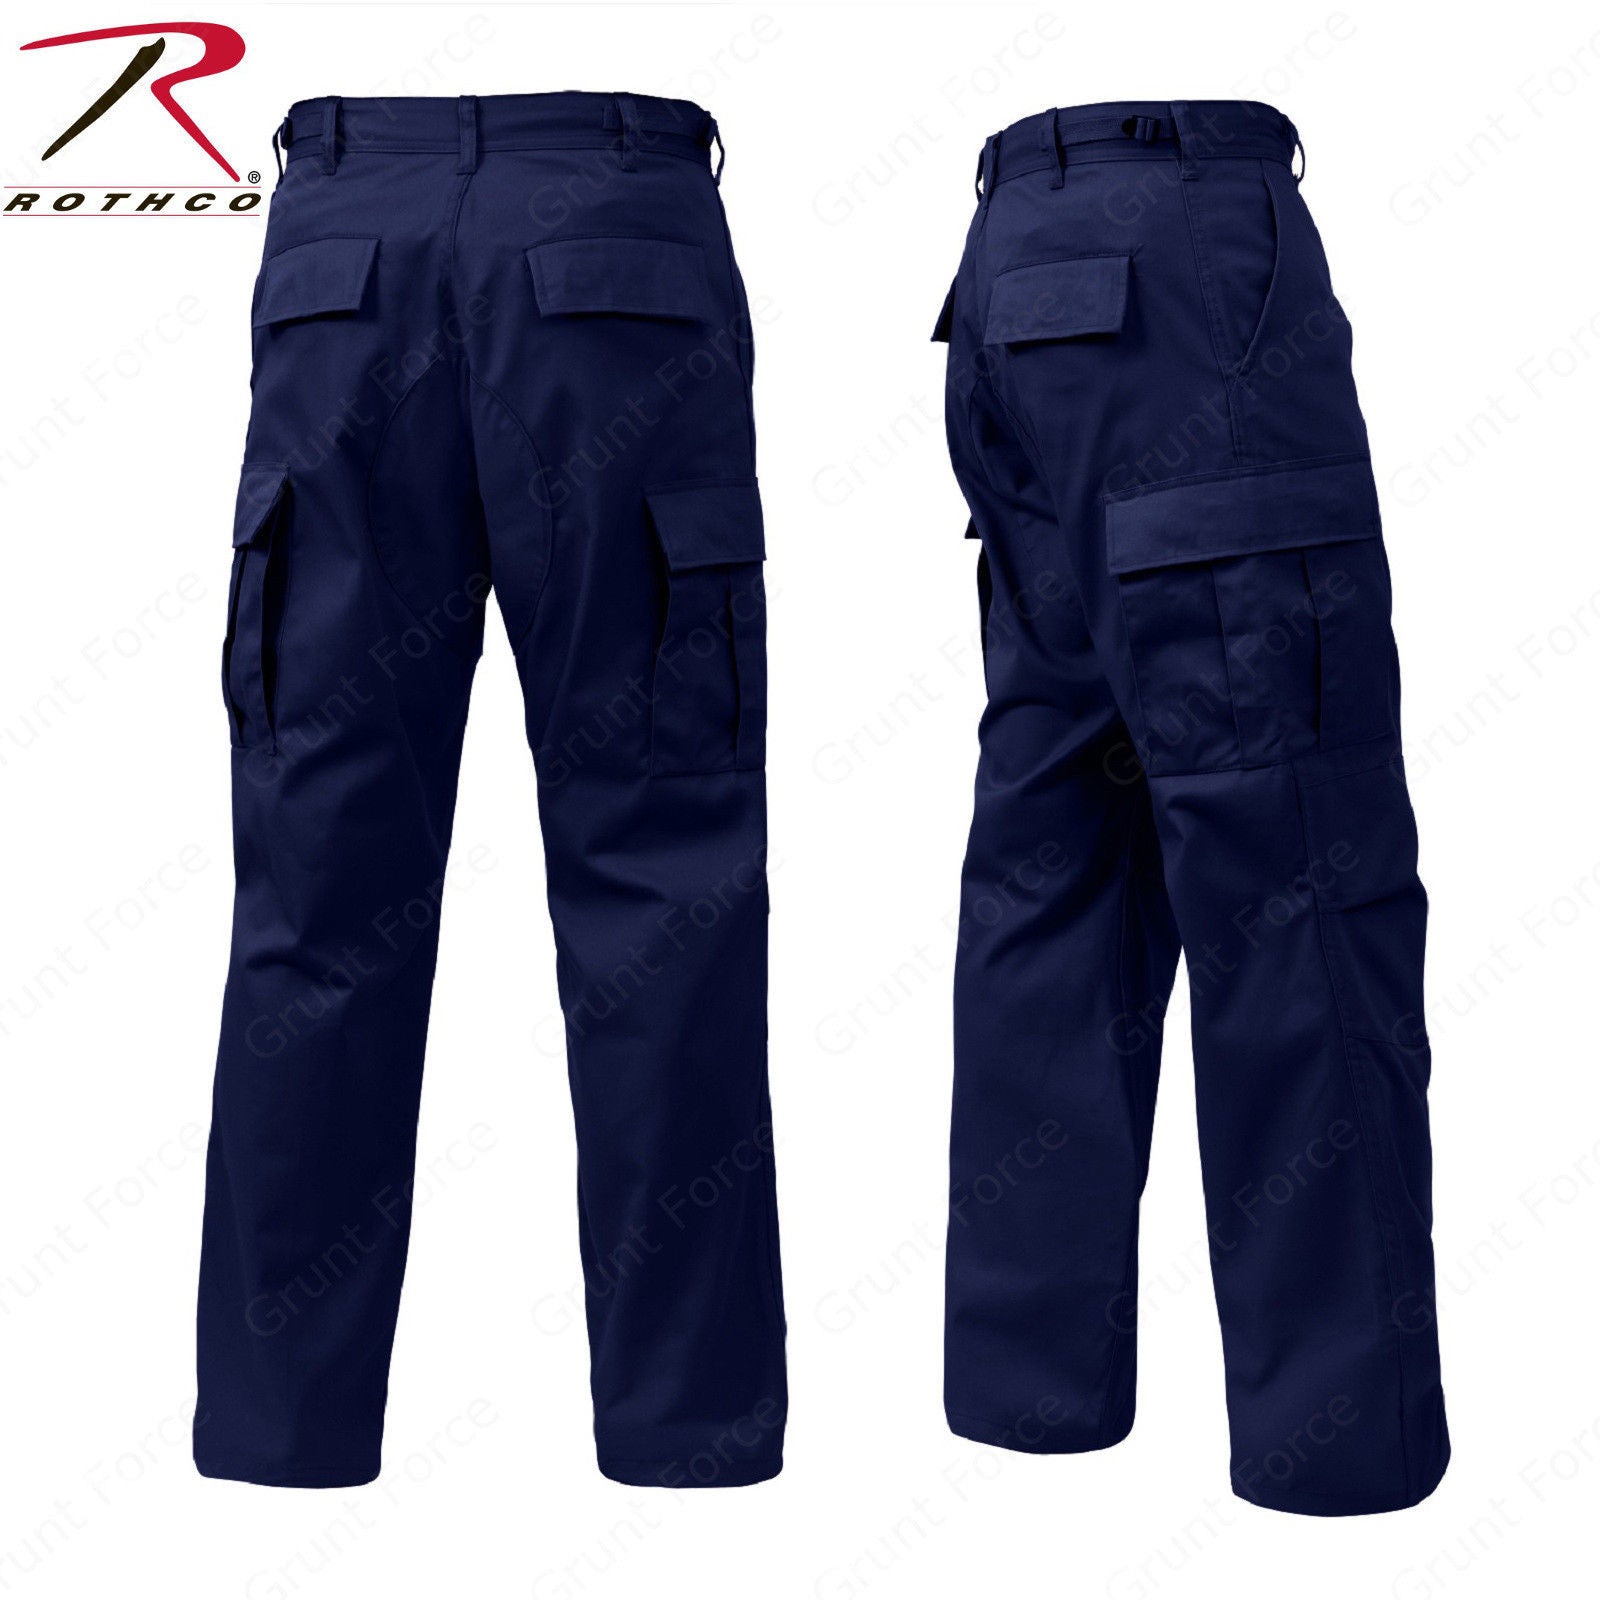 Rothco Men's Midnite Navy Blue BDU Pants - 6 Pocket Military Style Uni ...